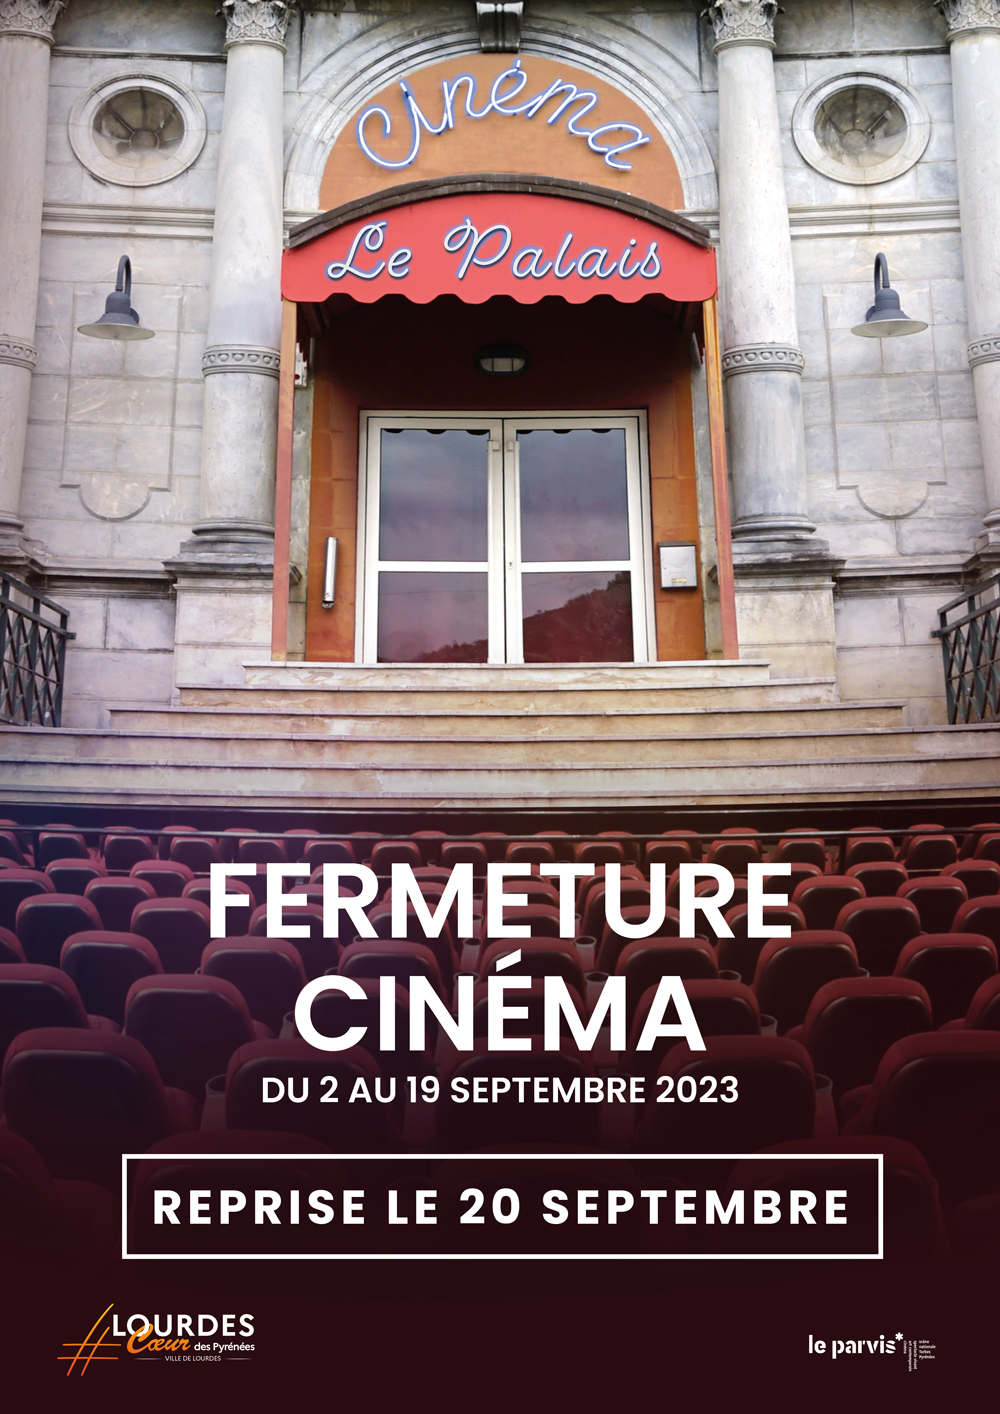 Cinema Le Palais